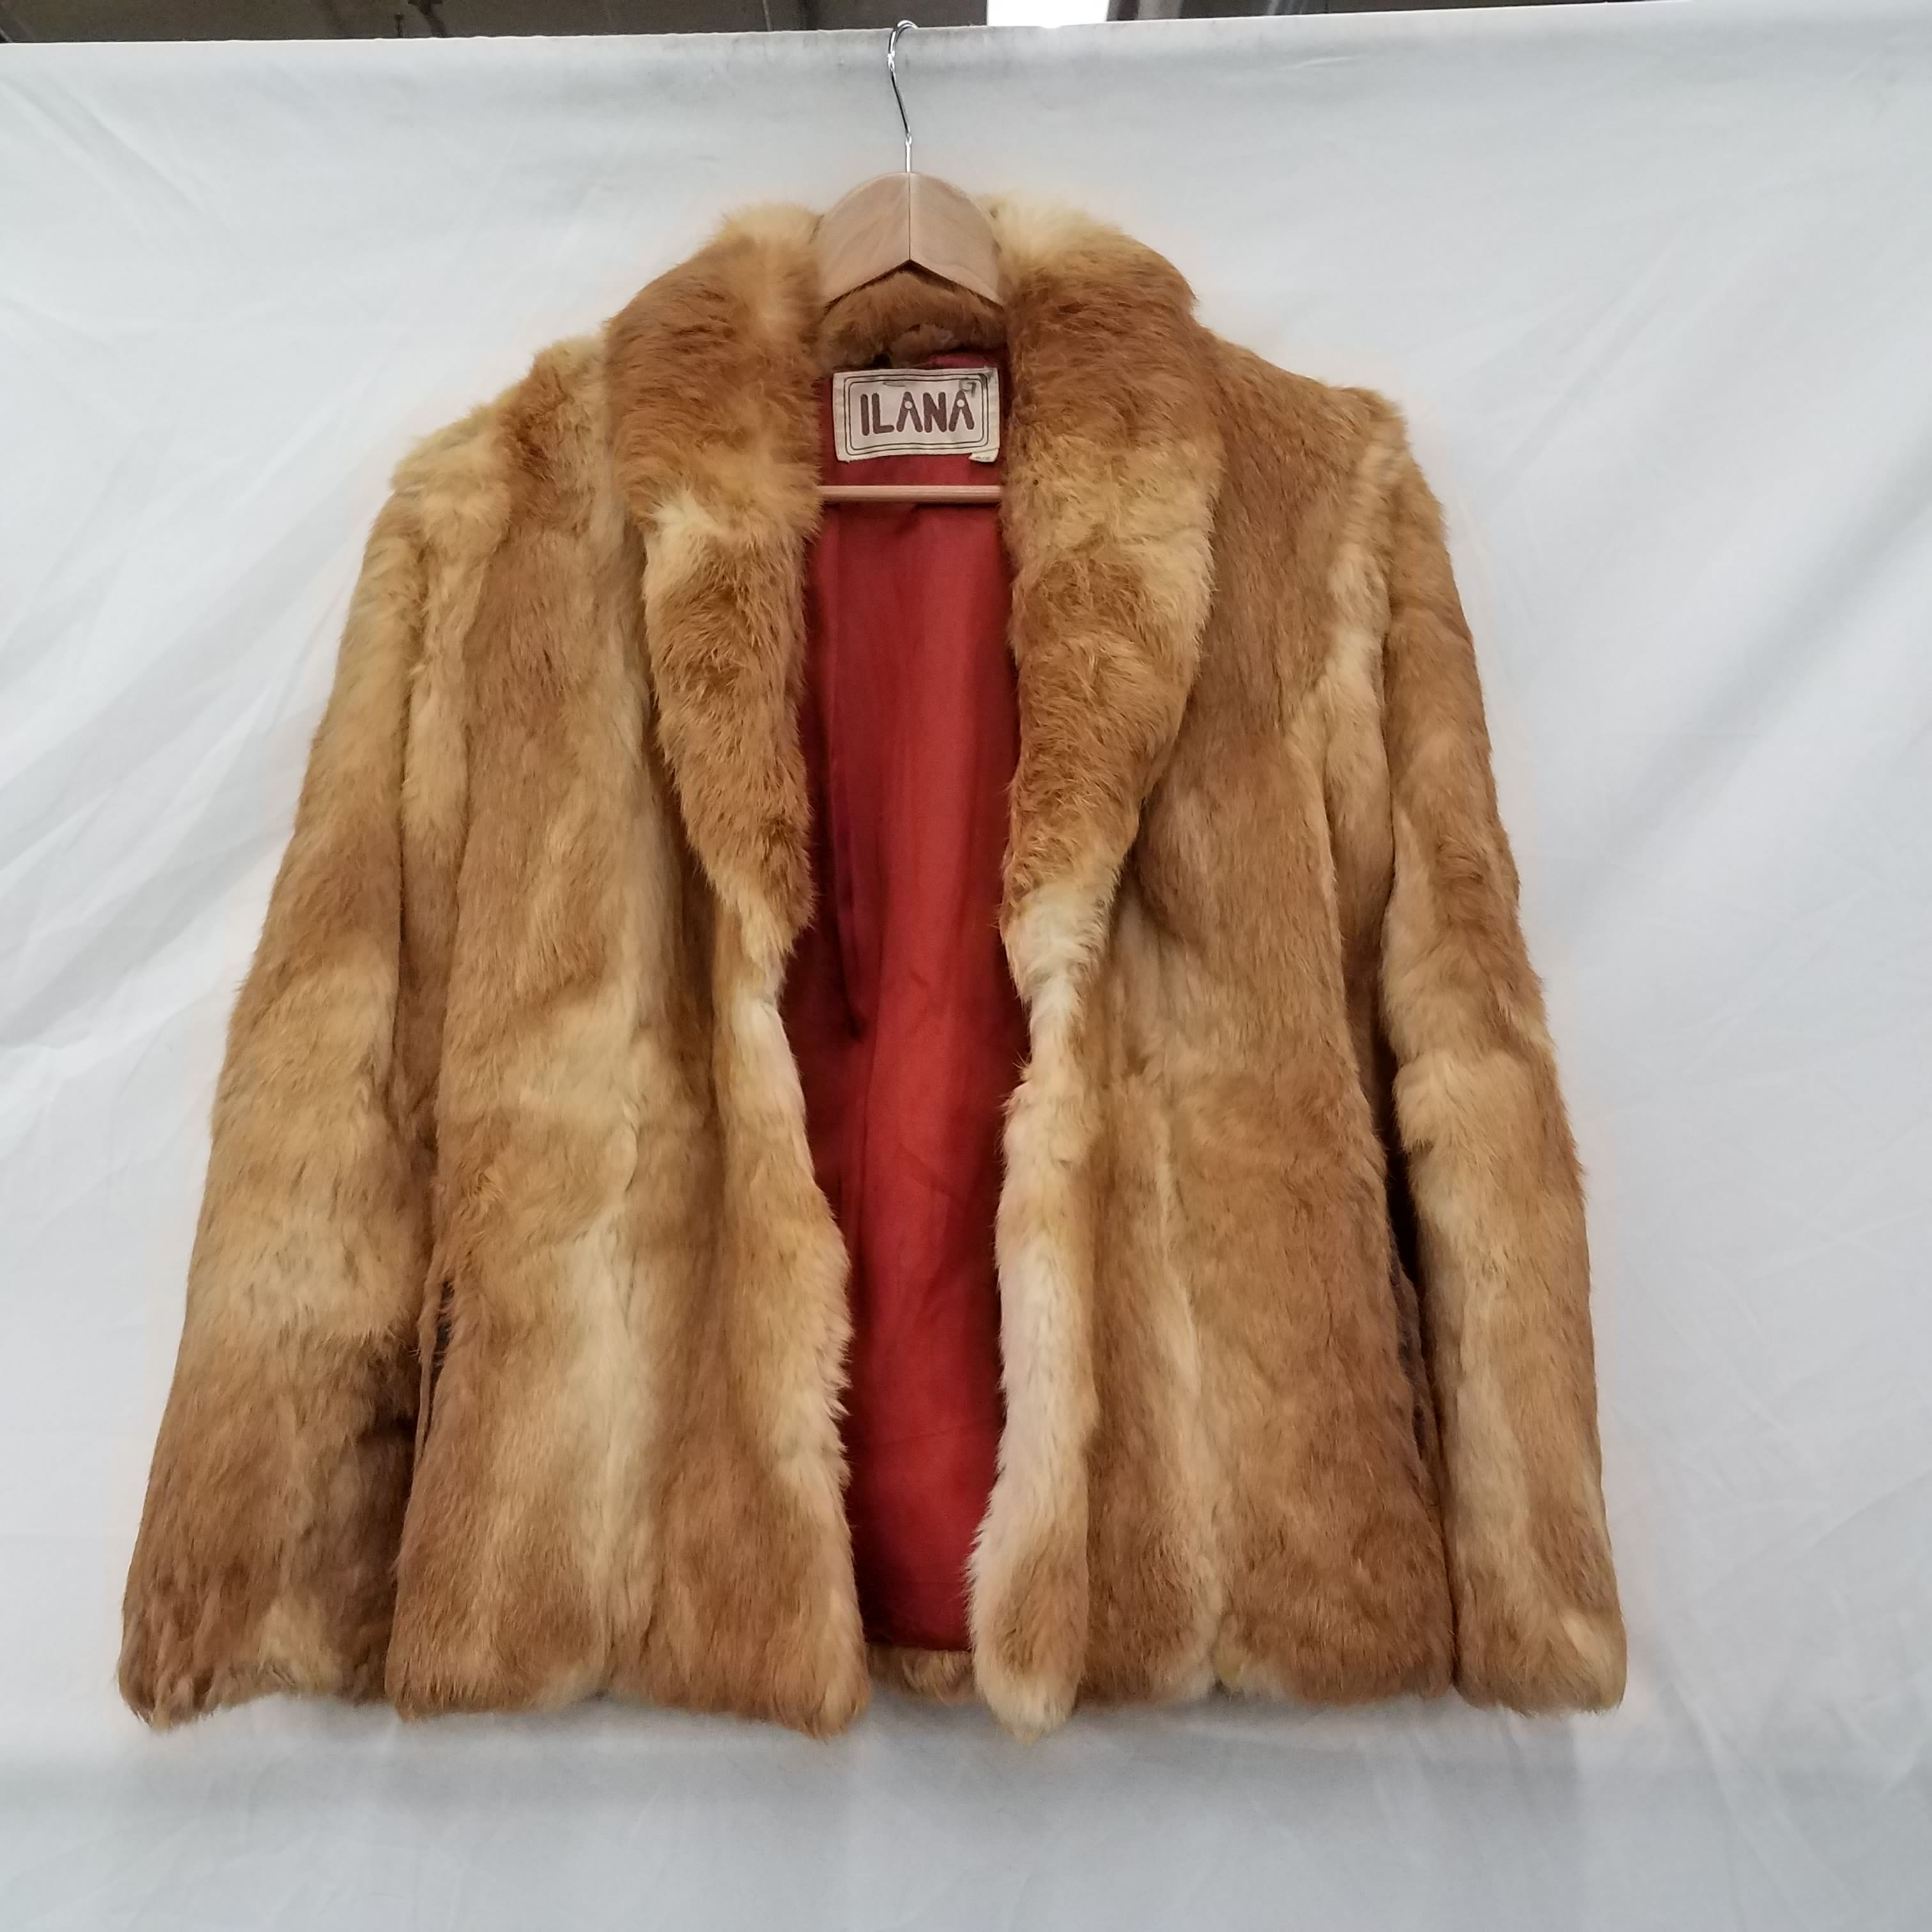 Split End' Vintage White Rabbit Fur Jacket – shop good cult